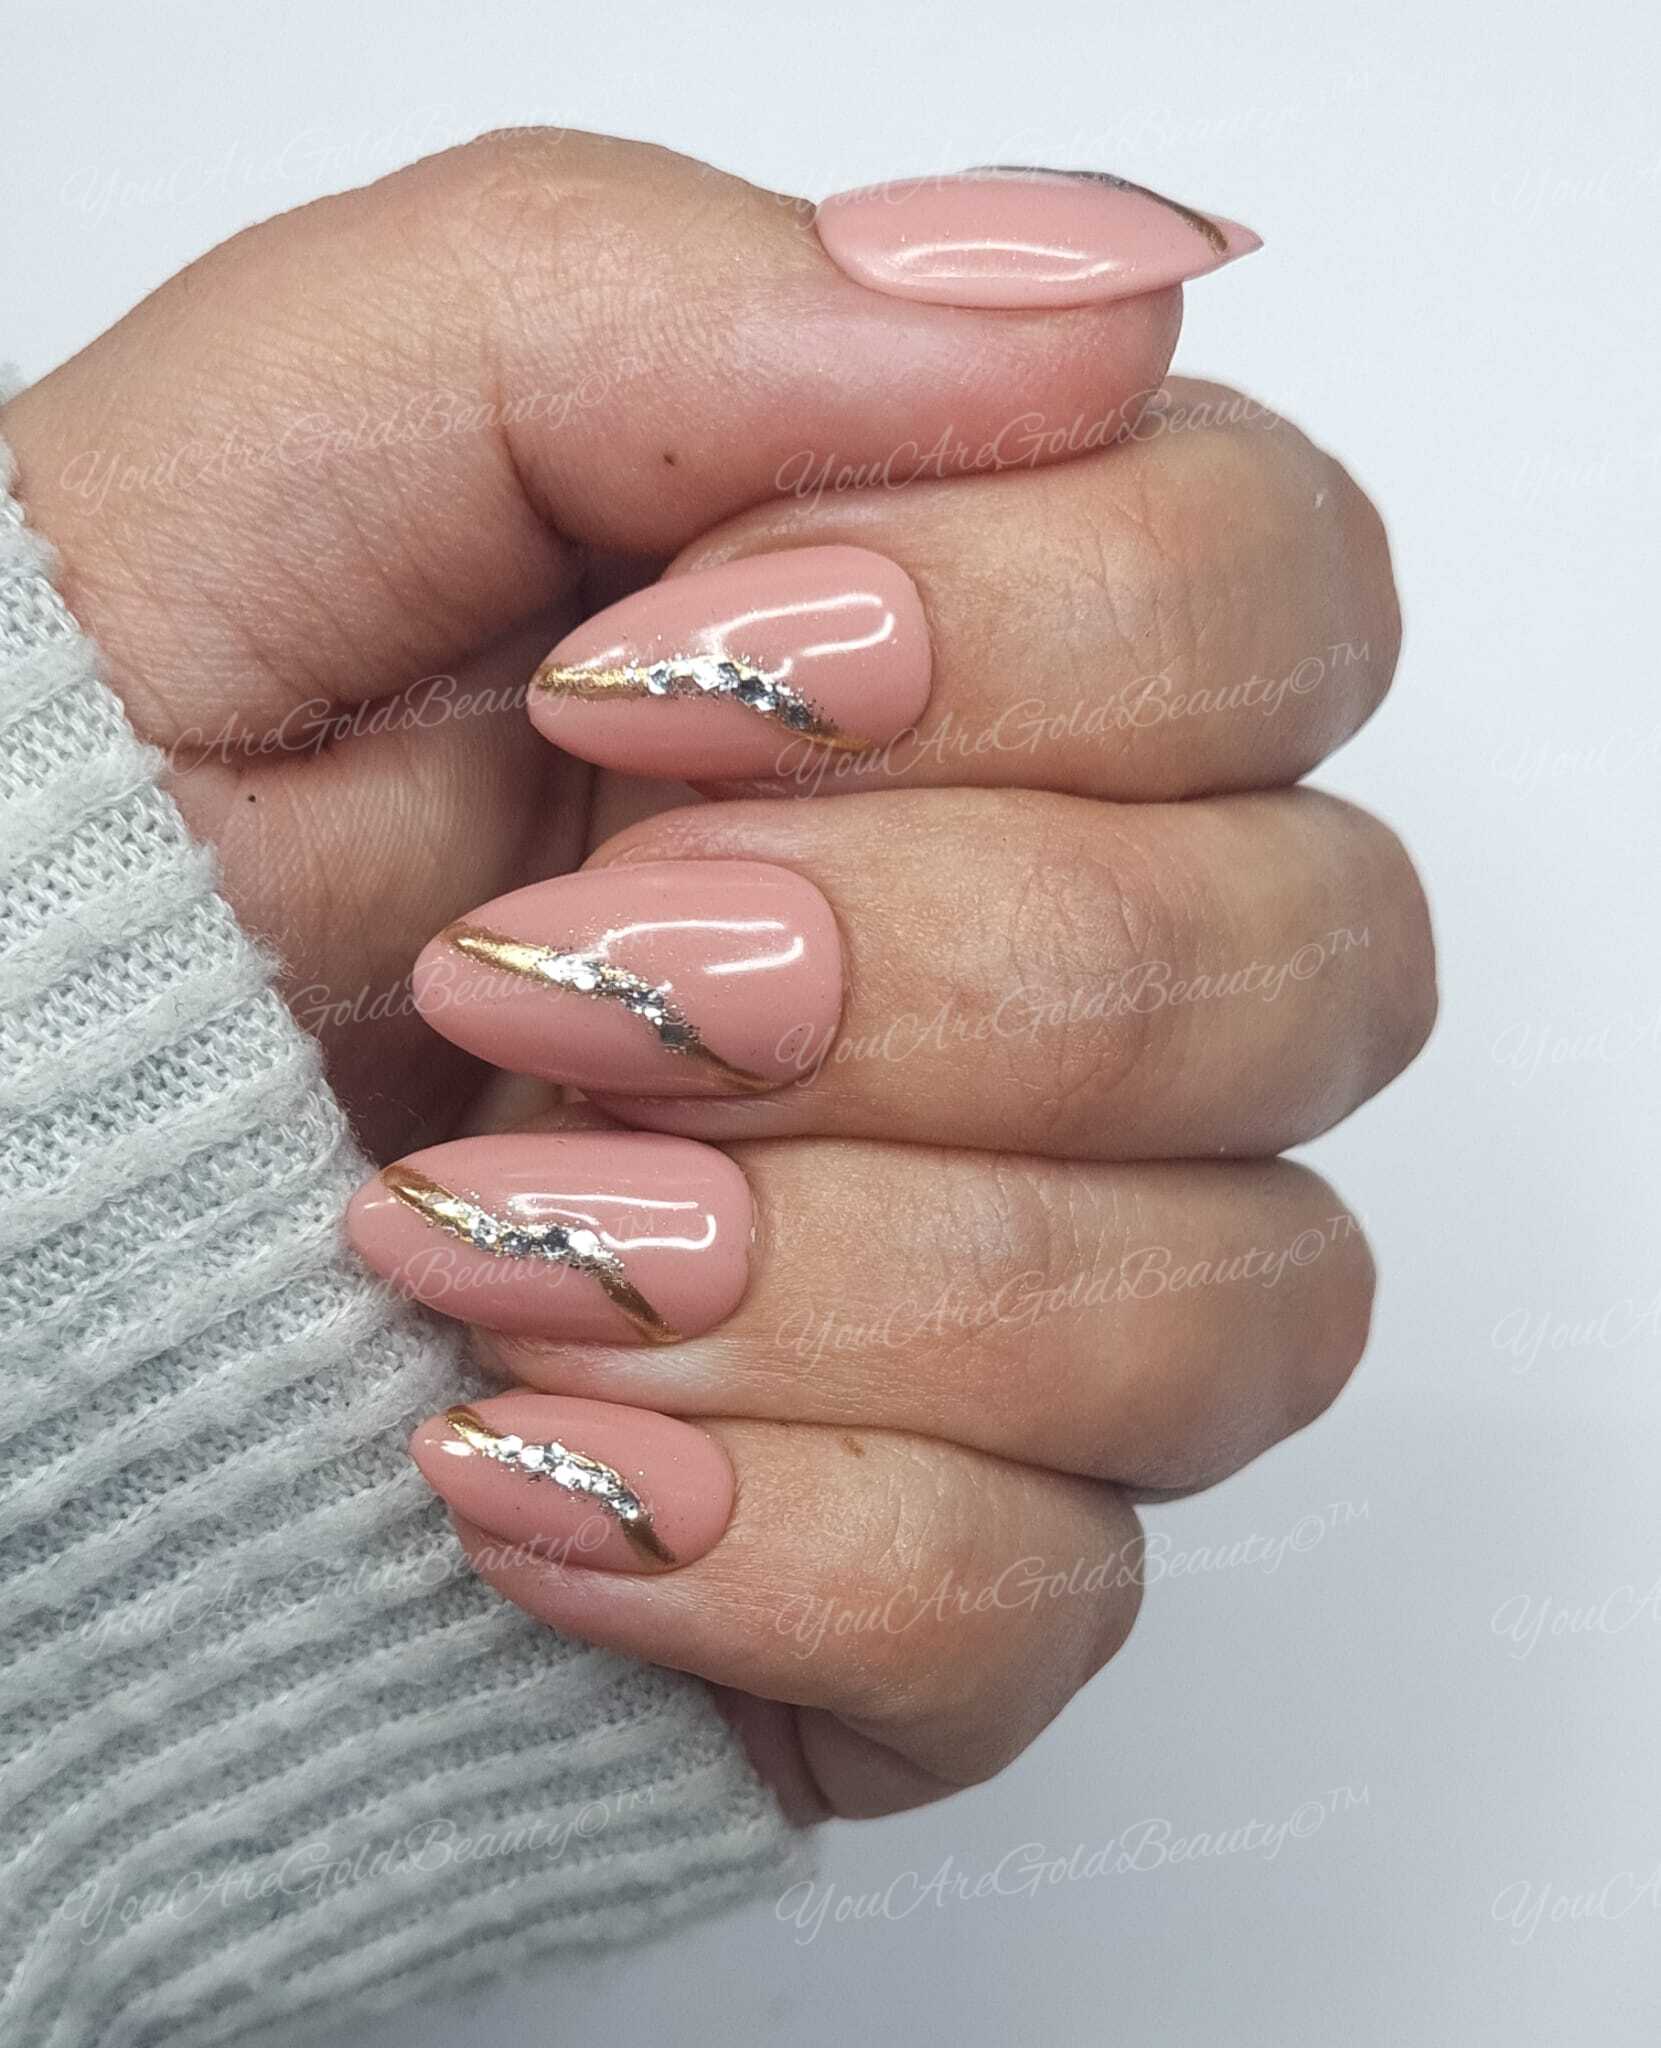 Extra Short Almond nails Blush Pink Gold Chrome glitter nails.